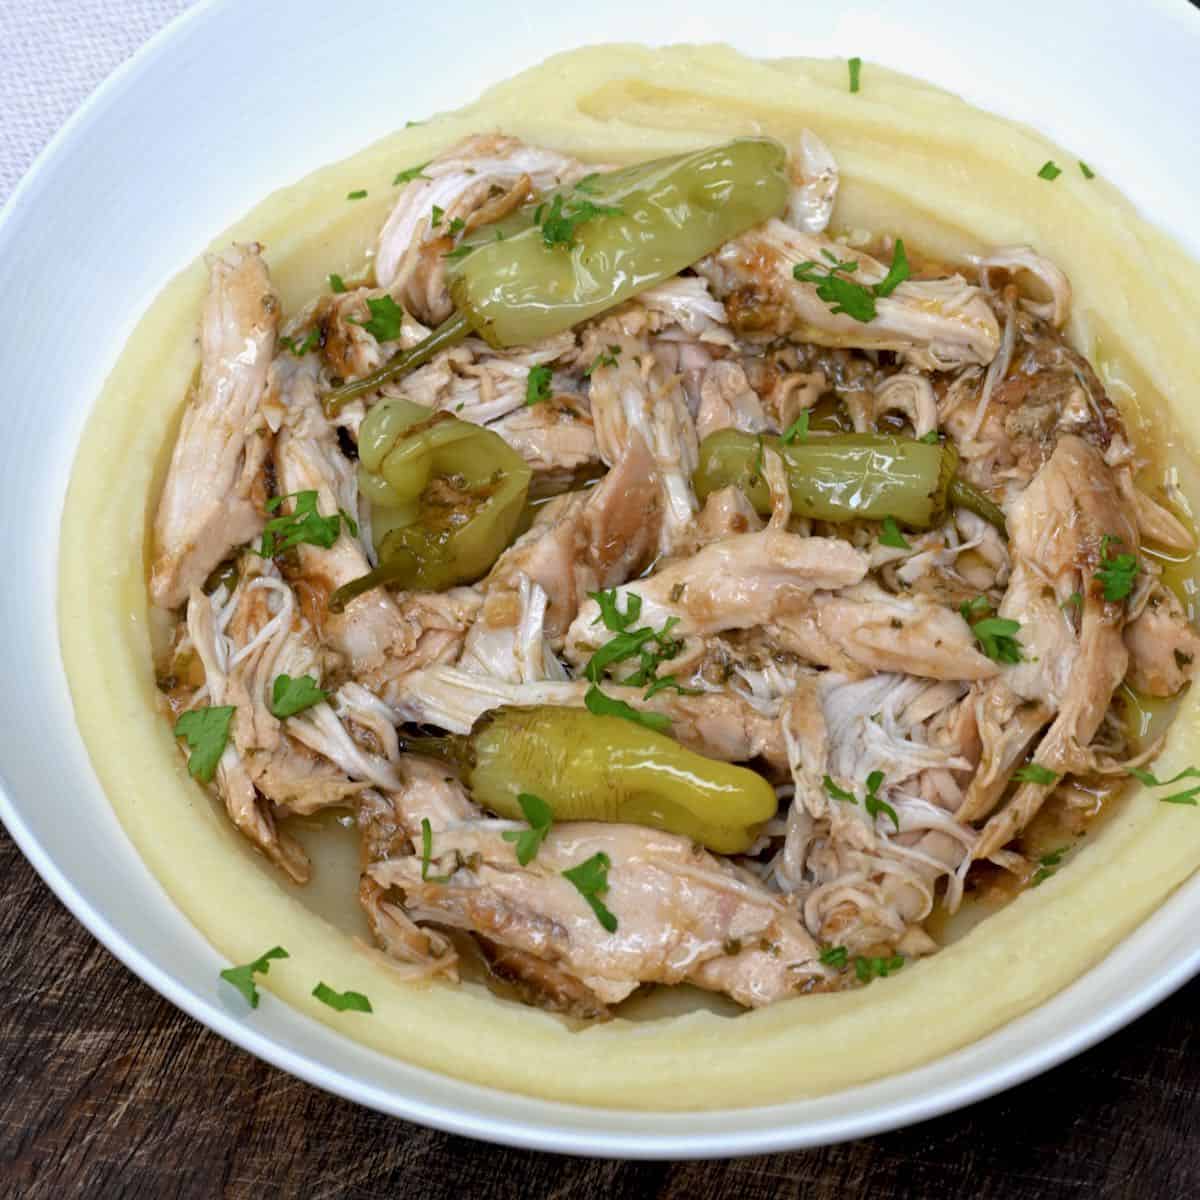 The Best Chicken Seasoning Recipe - Alphafoodie